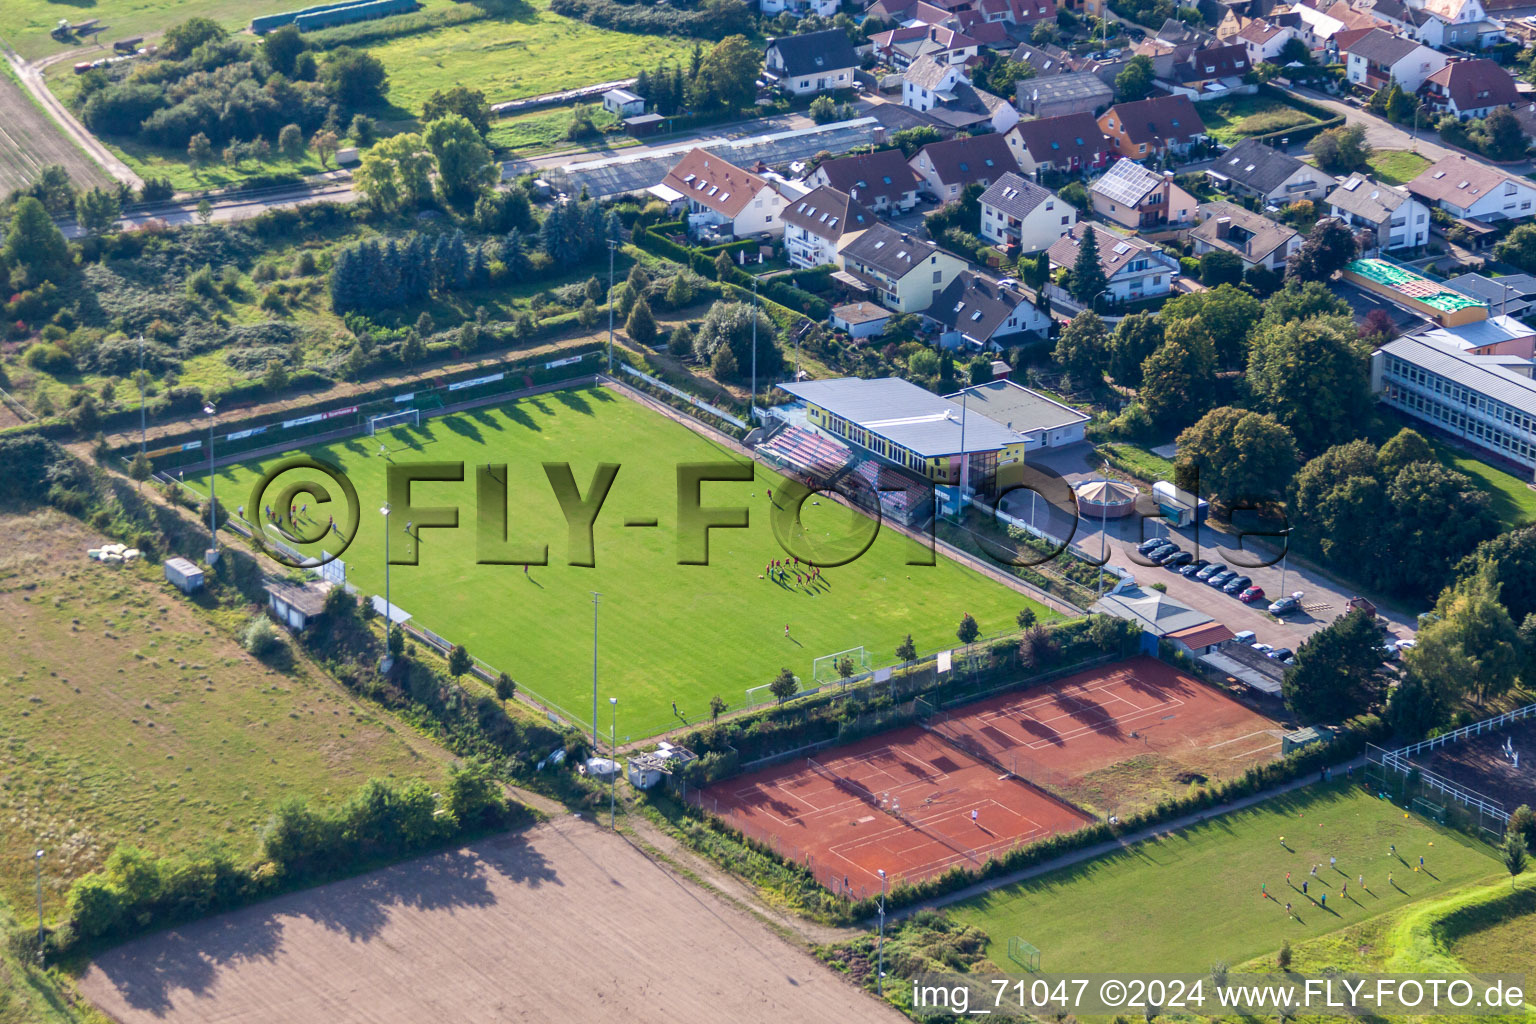 SV Weingarten, tennis club and football field in Weingarten in the state Rhineland-Palatinate, Germany